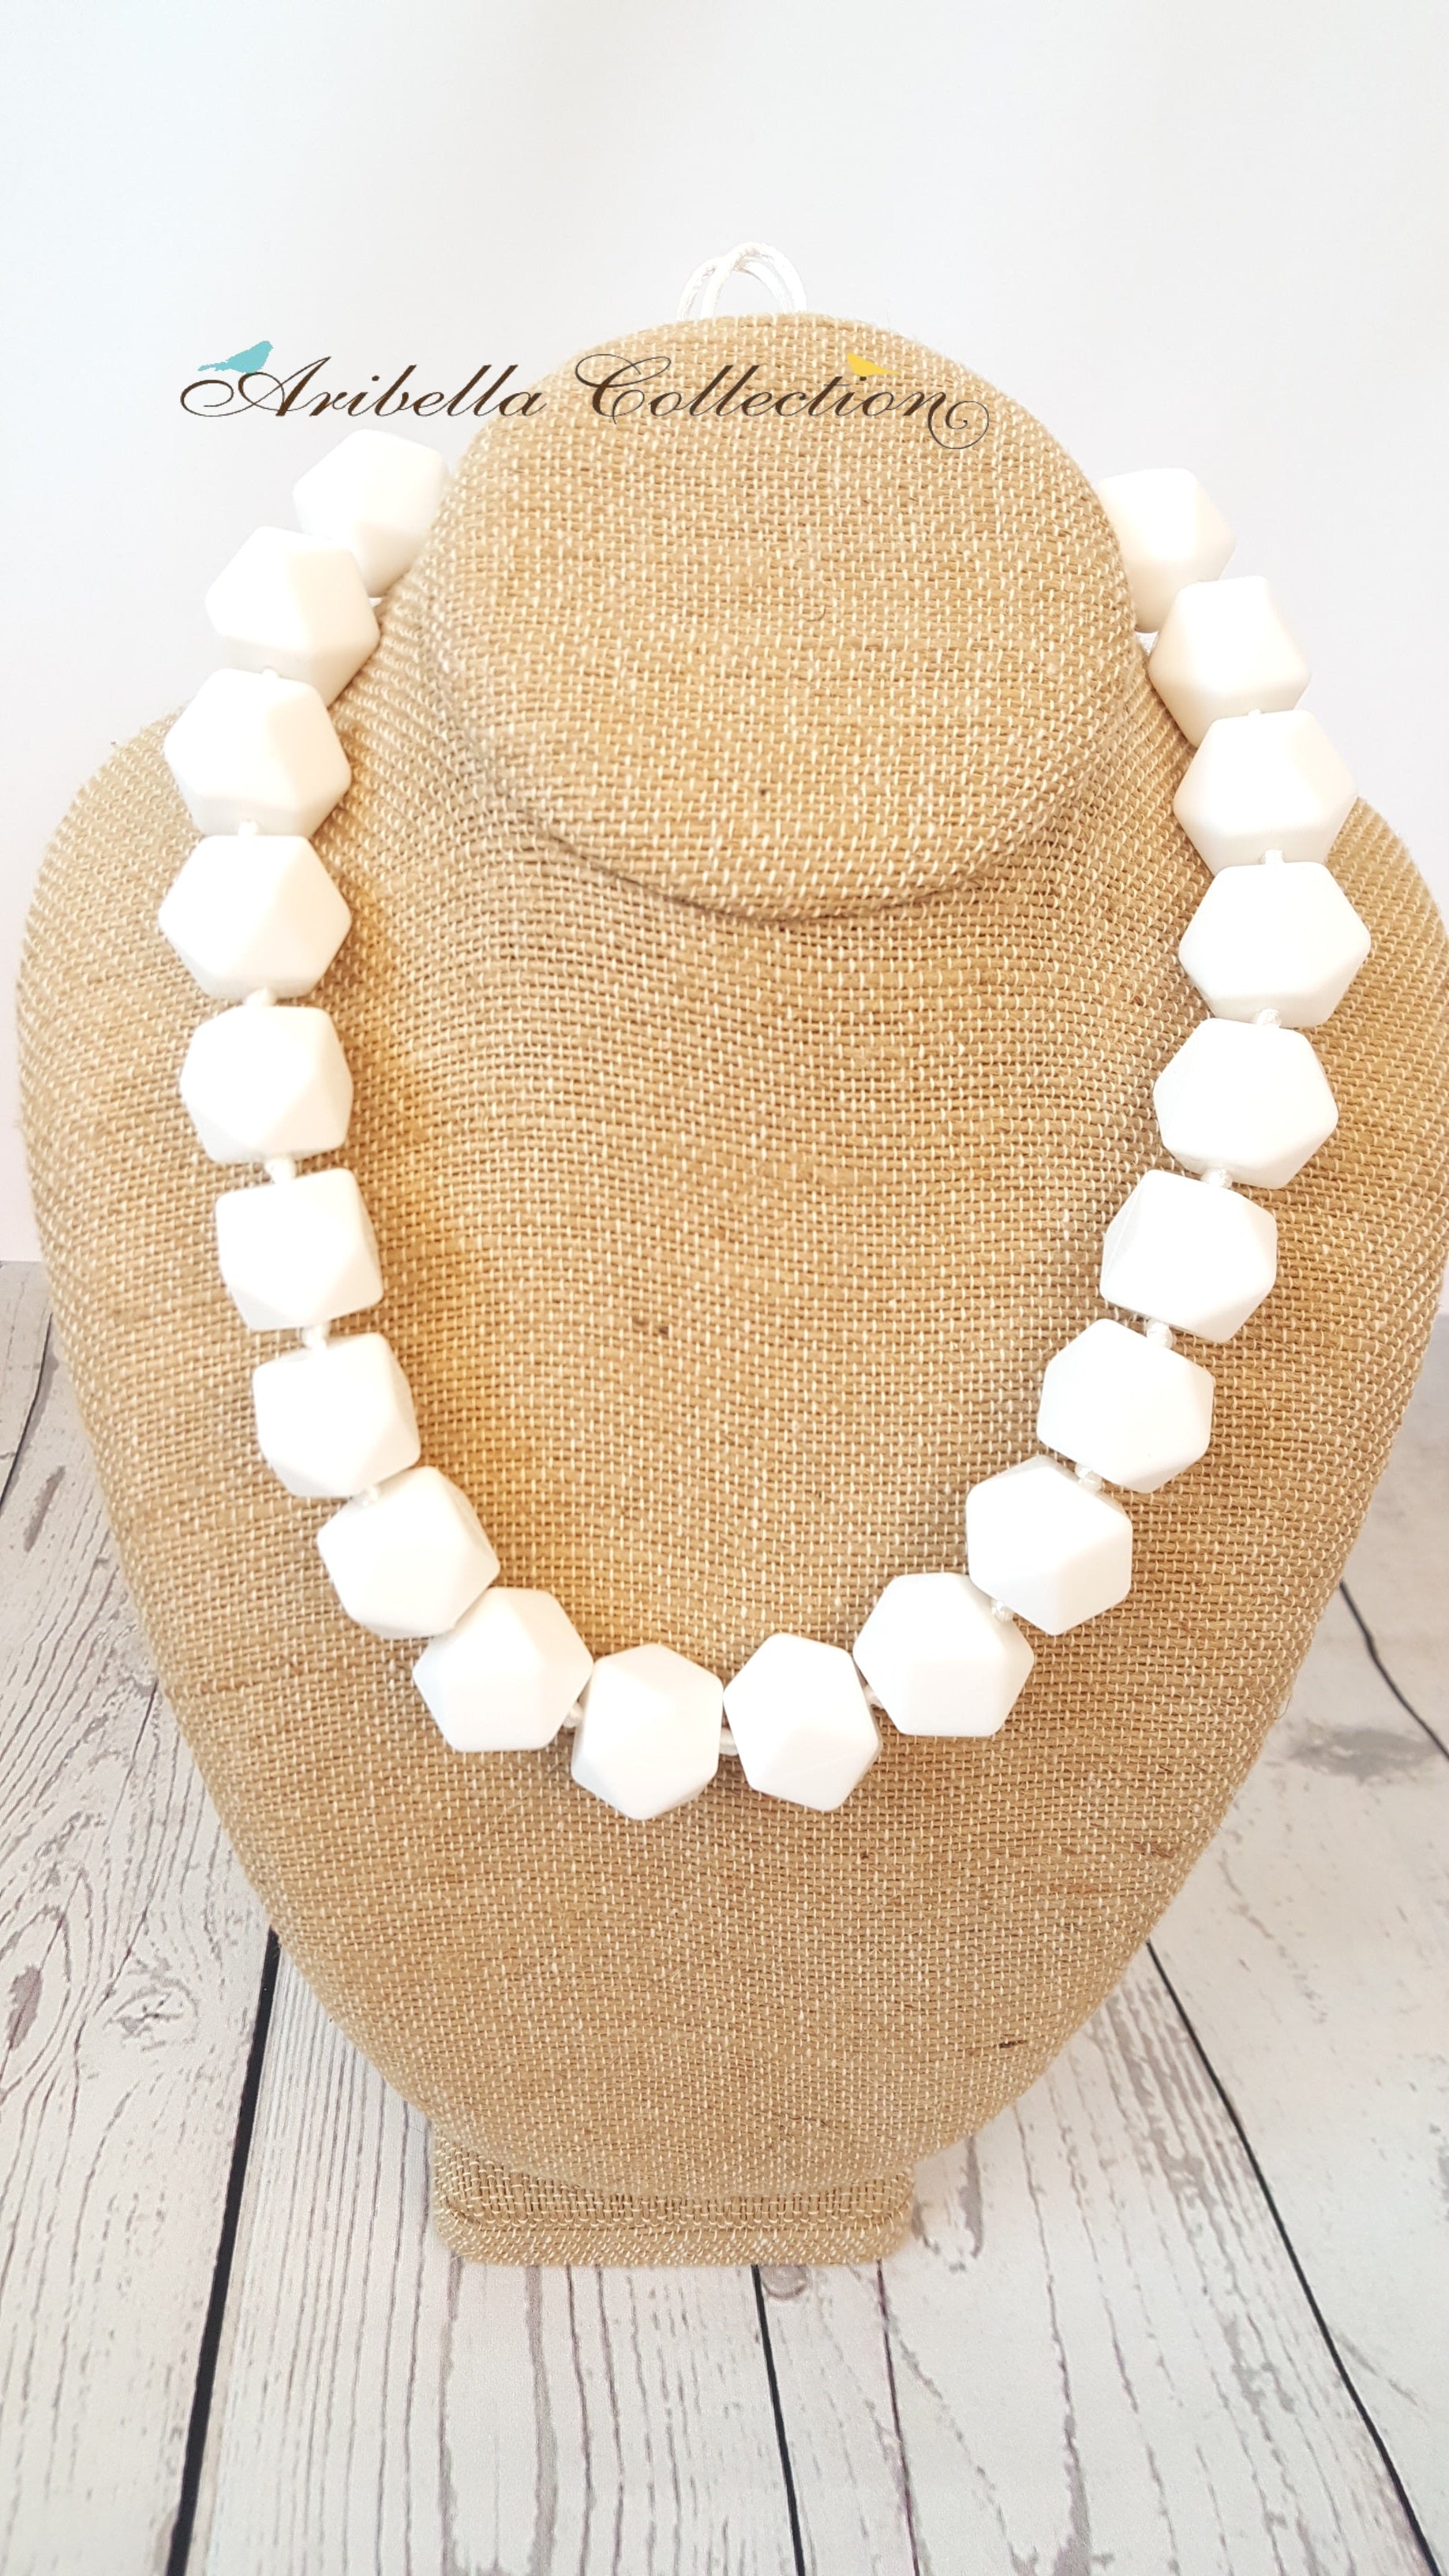 Silicone Necklace - White - Aribella Collection, Inc.